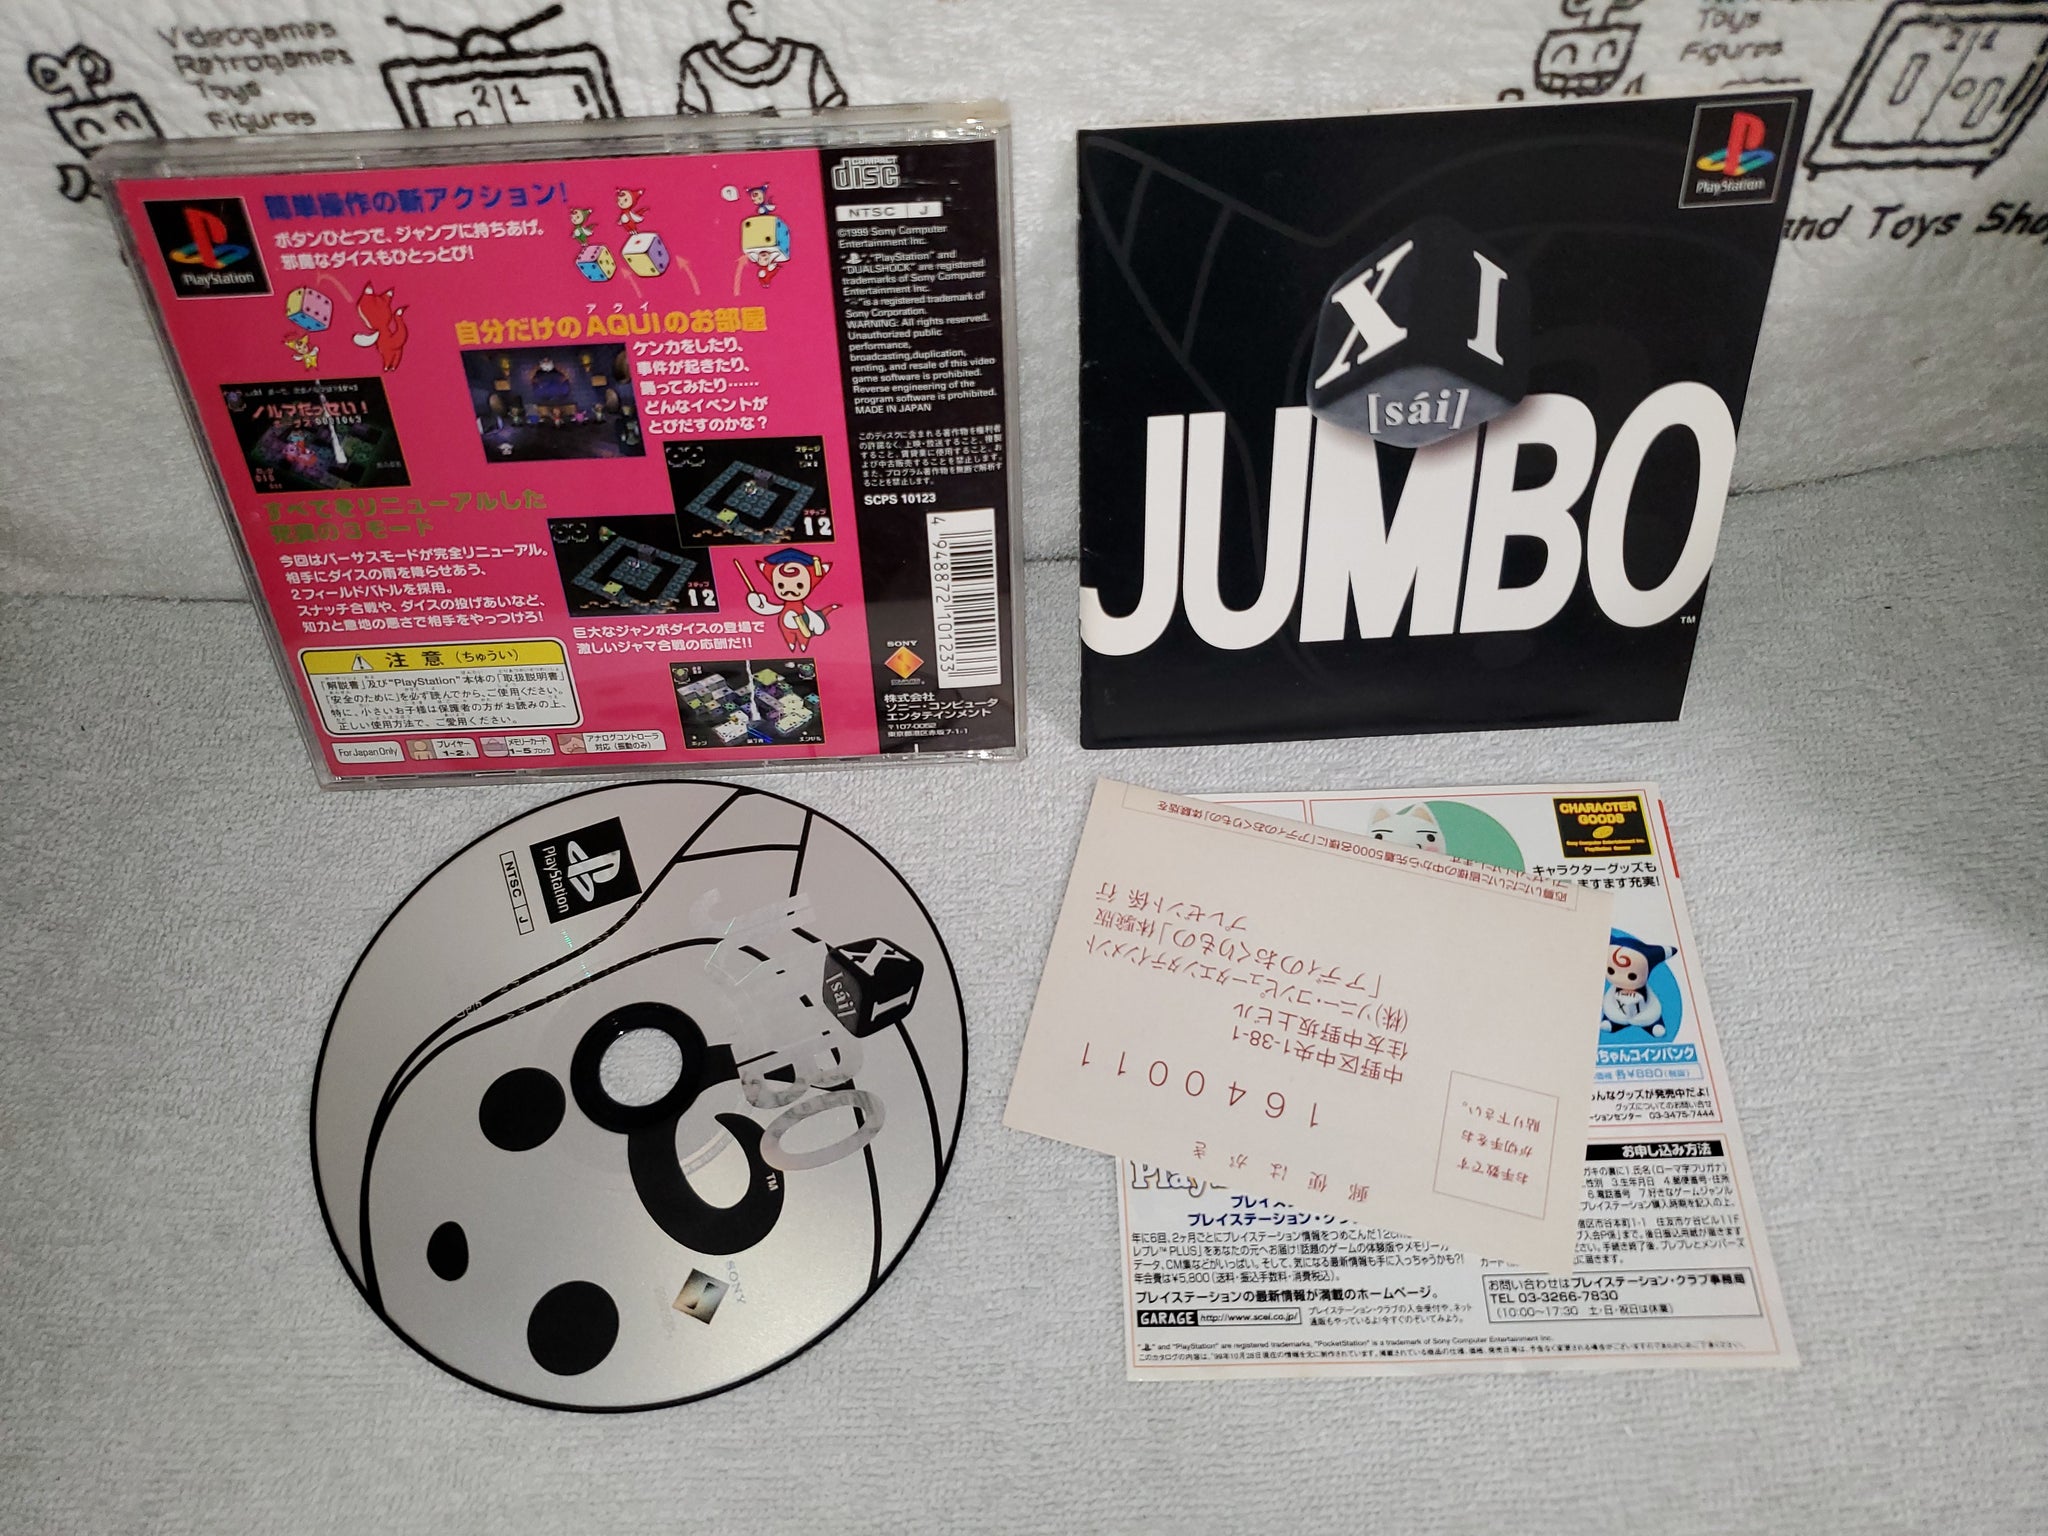 XI jumbo - sony playstation ps1 japan – The Emporium RetroGames